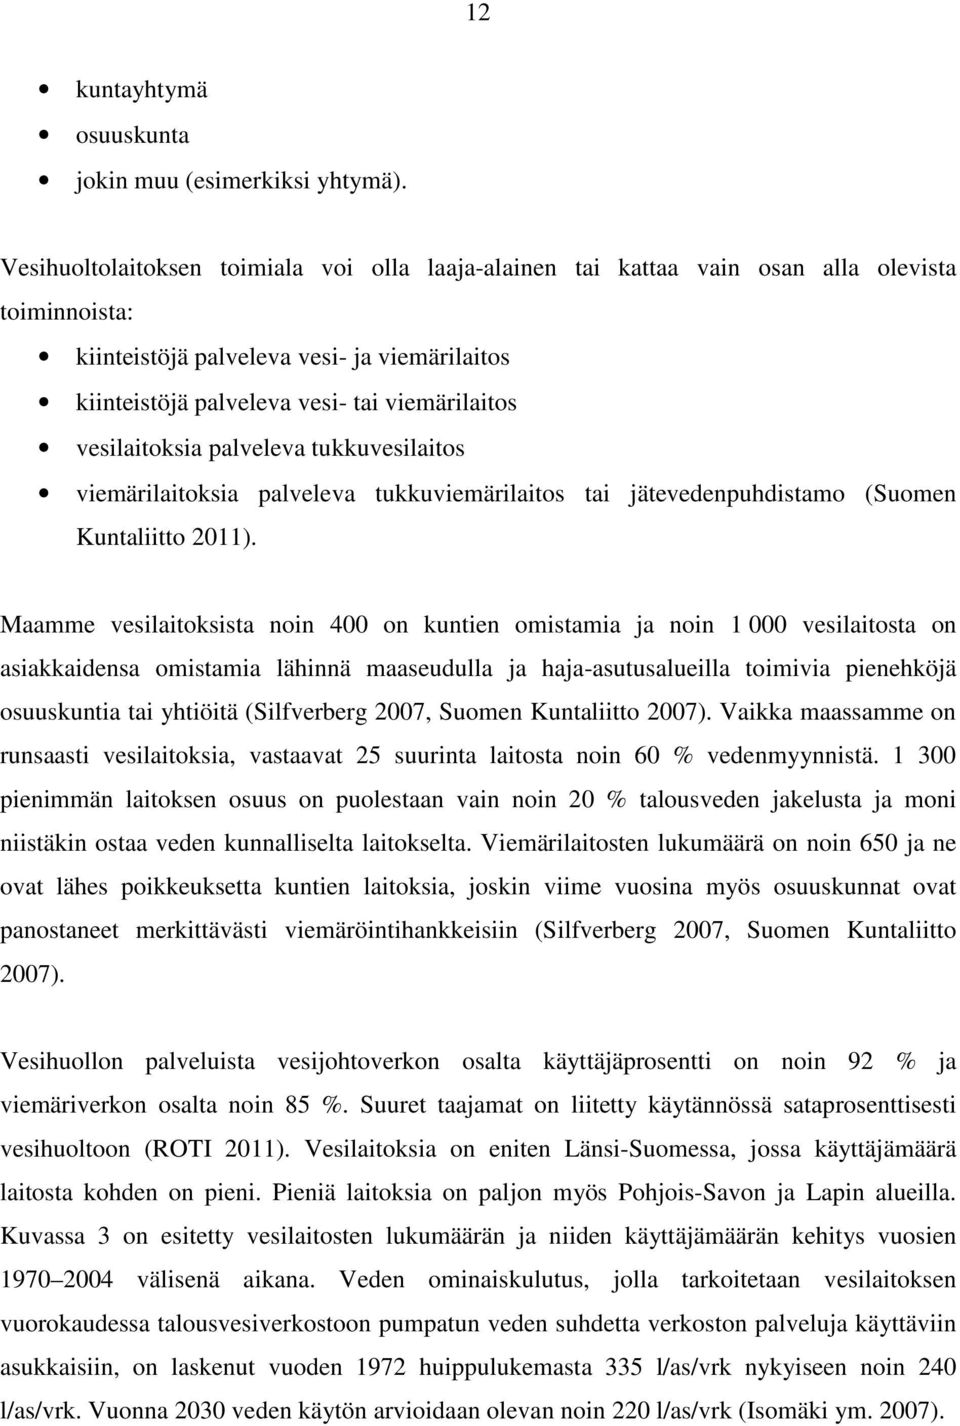 vesilaitoksia palveleva tukkuvesilaitos viemärilaitoksia palveleva tukkuviemärilaitos tai jätevedenpuhdistamo (Suomen Kuntaliitto 2011).